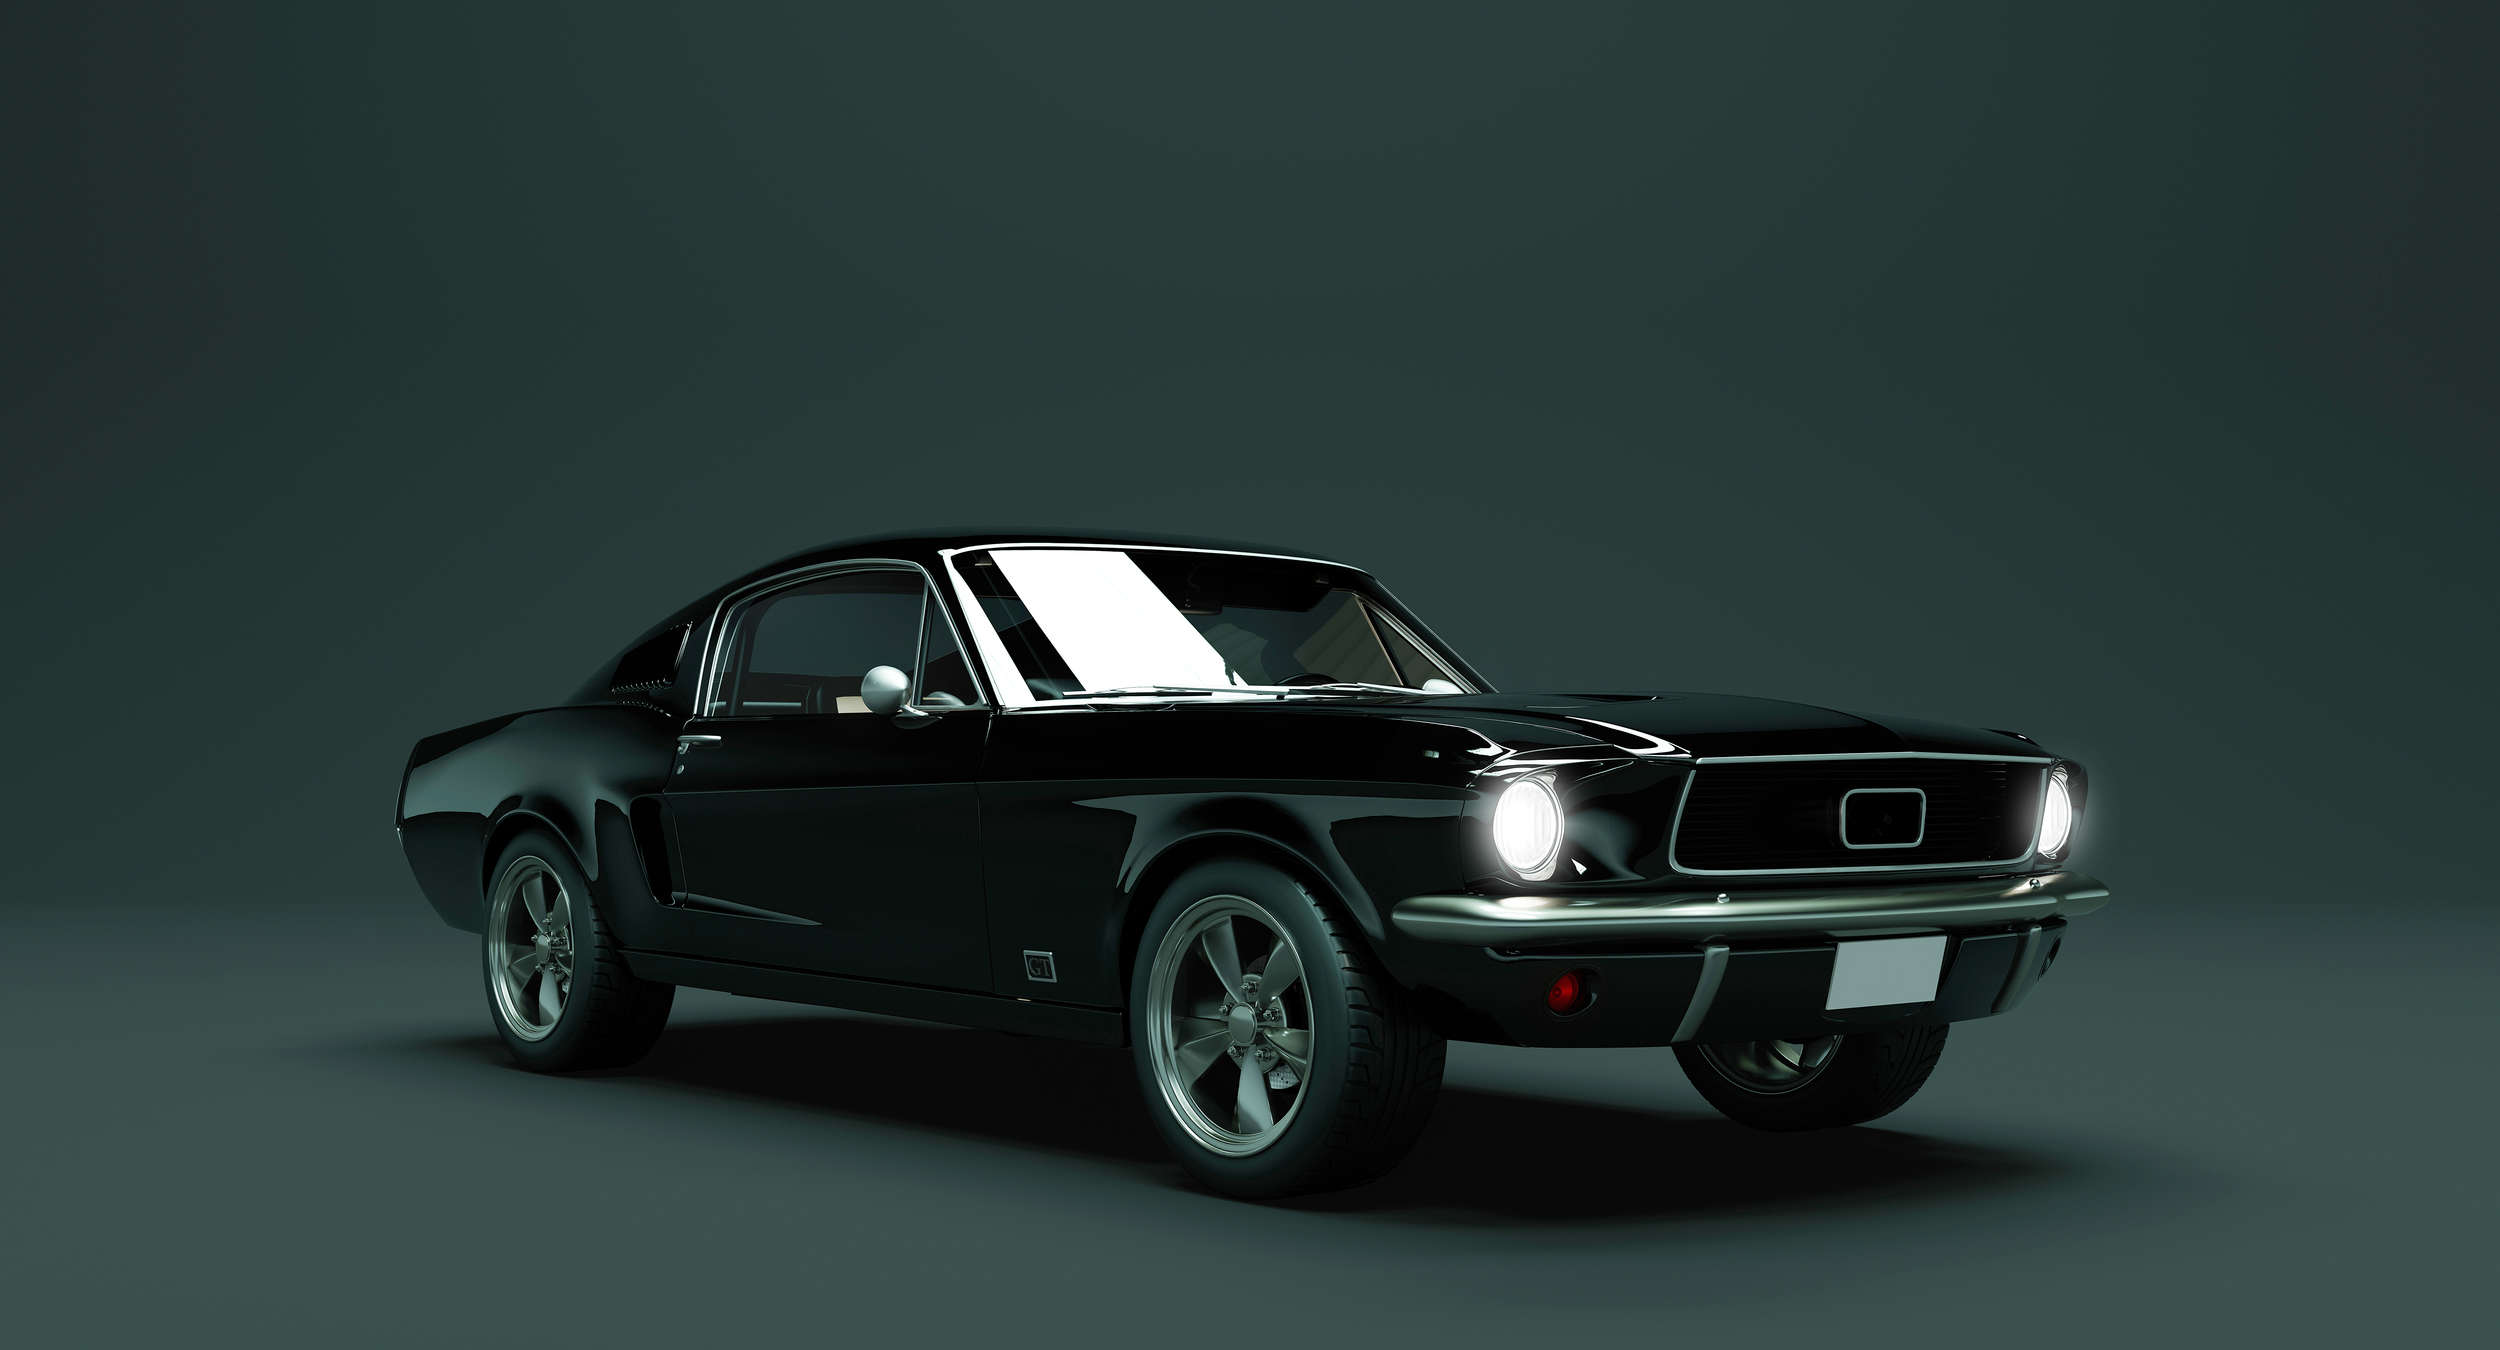             Mustang 2 - Fototapete, Mustang 1968 Vintage Car – Blau, Schwarz | Perlmutt Glattvlies
        